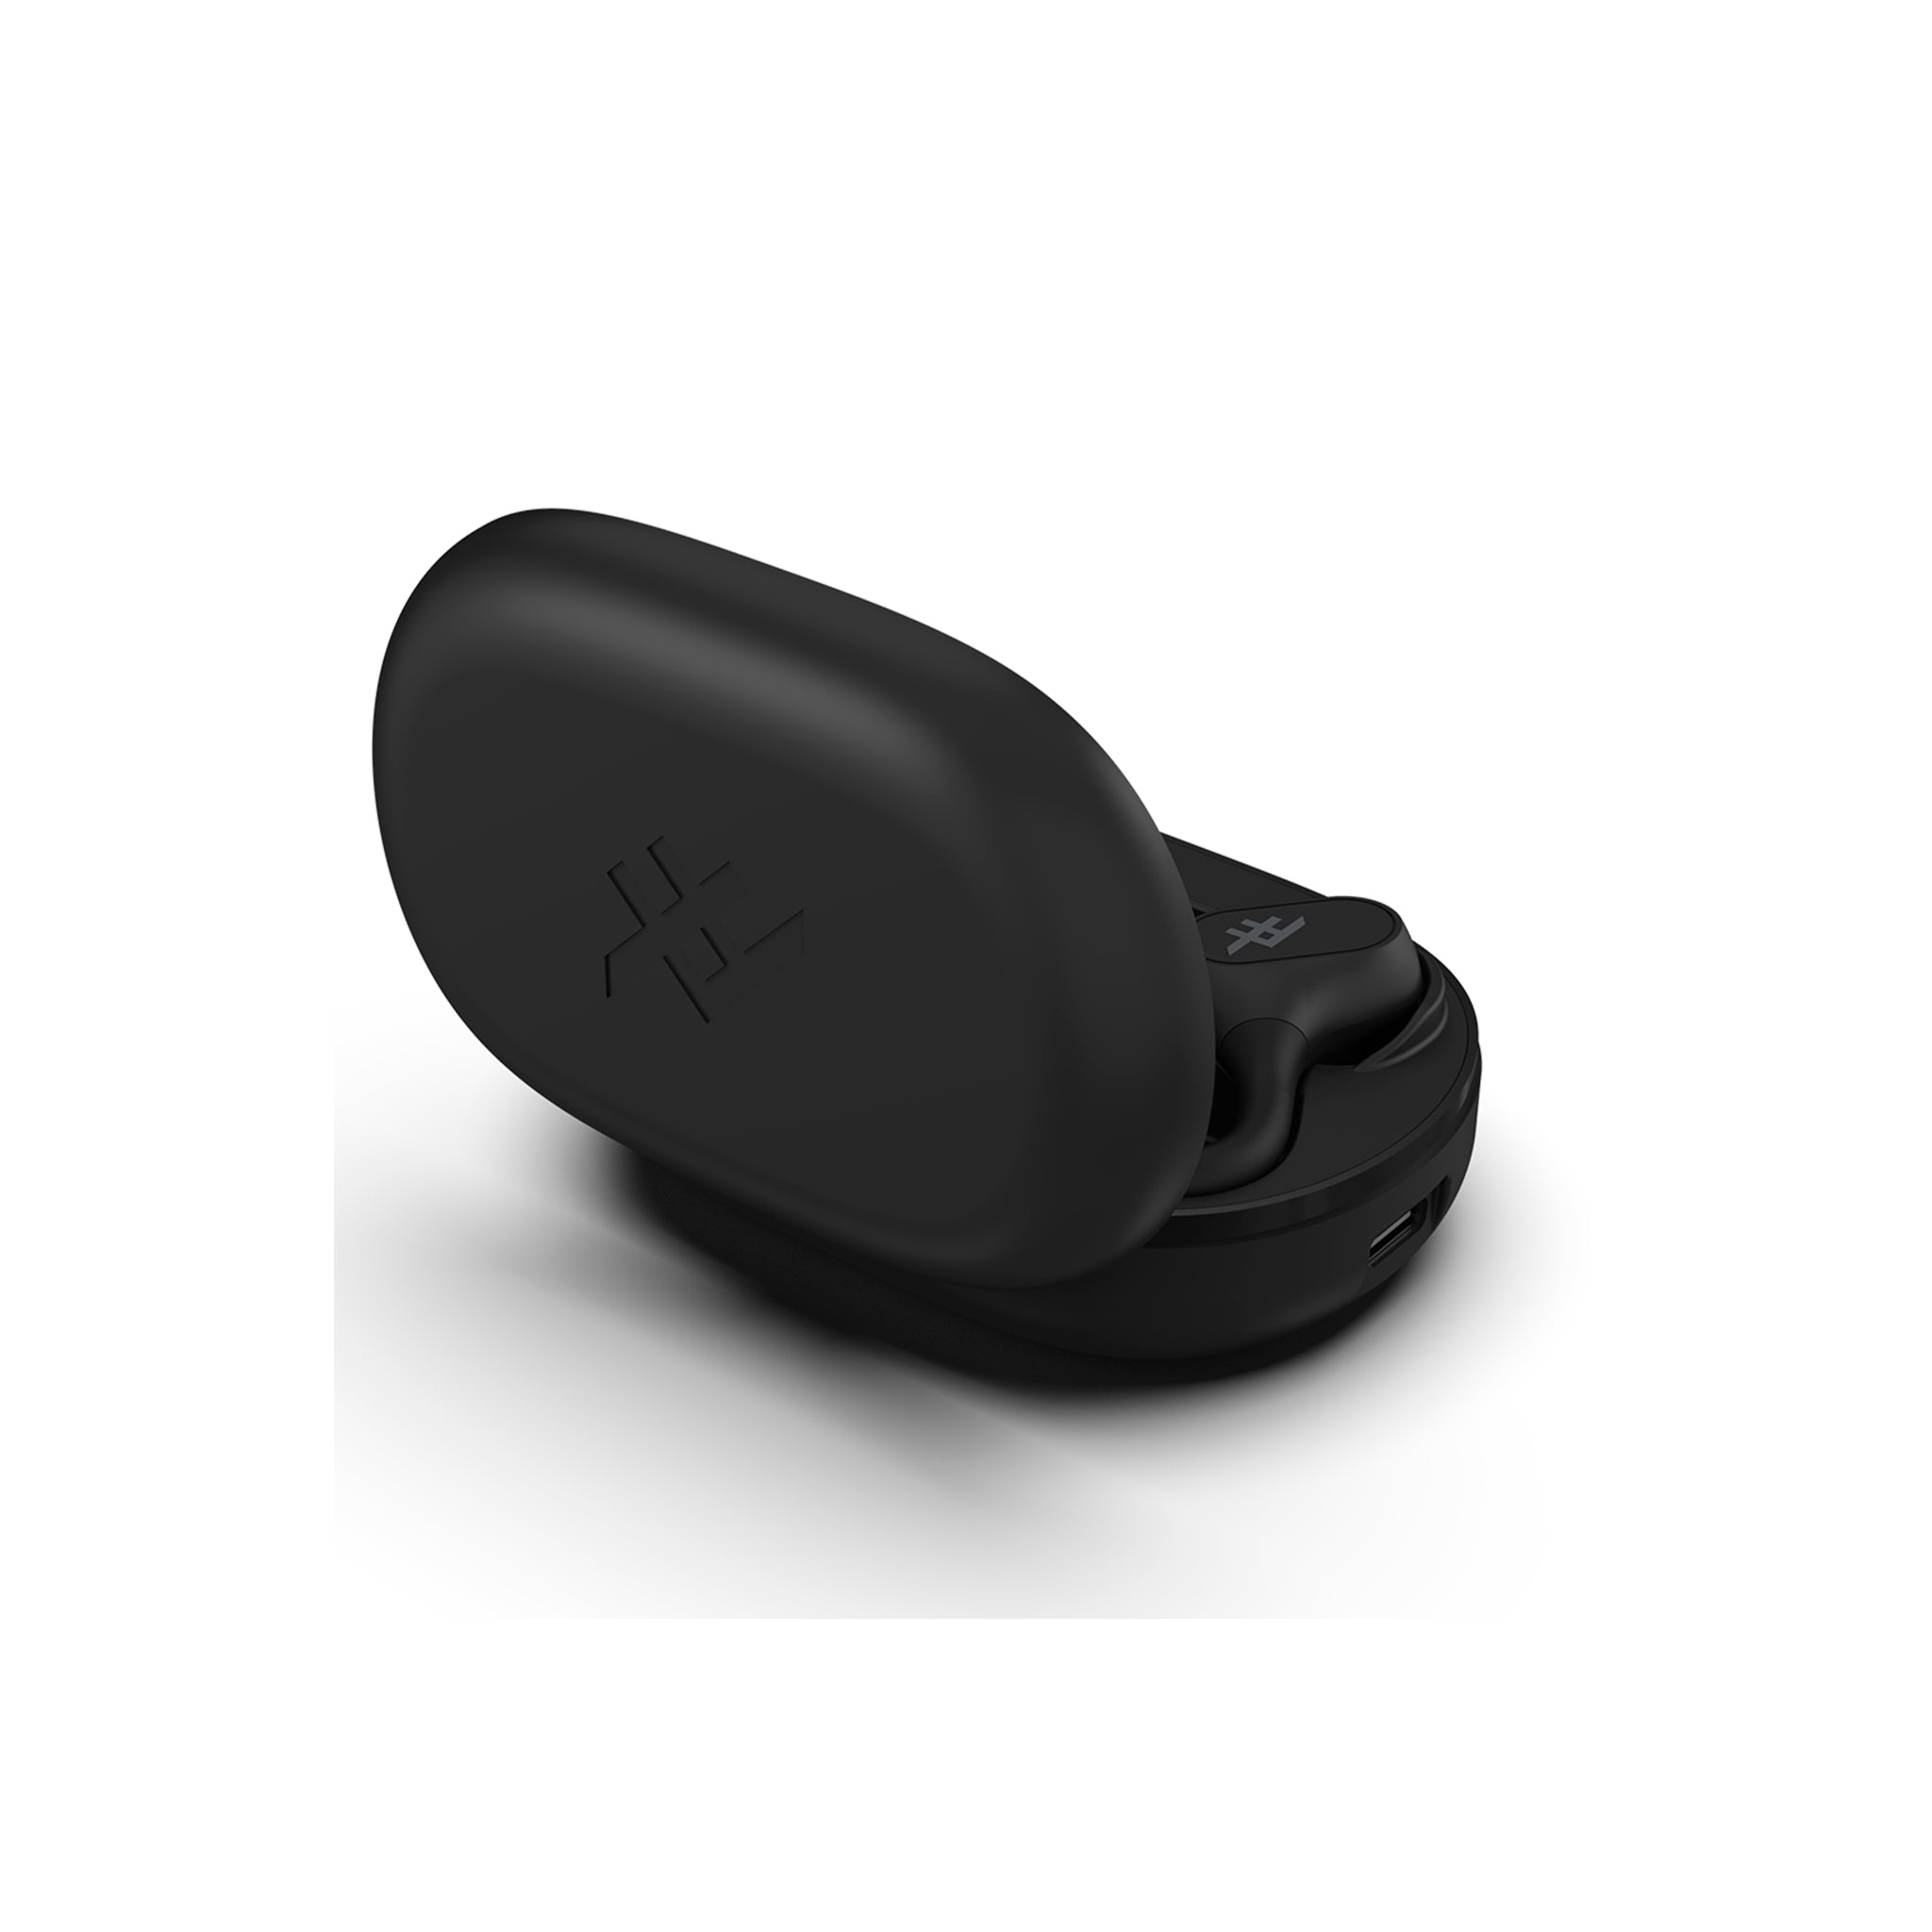 Ifrogz - Airtime Sport True Wireless In Ear Bluetooth Headphones - Black